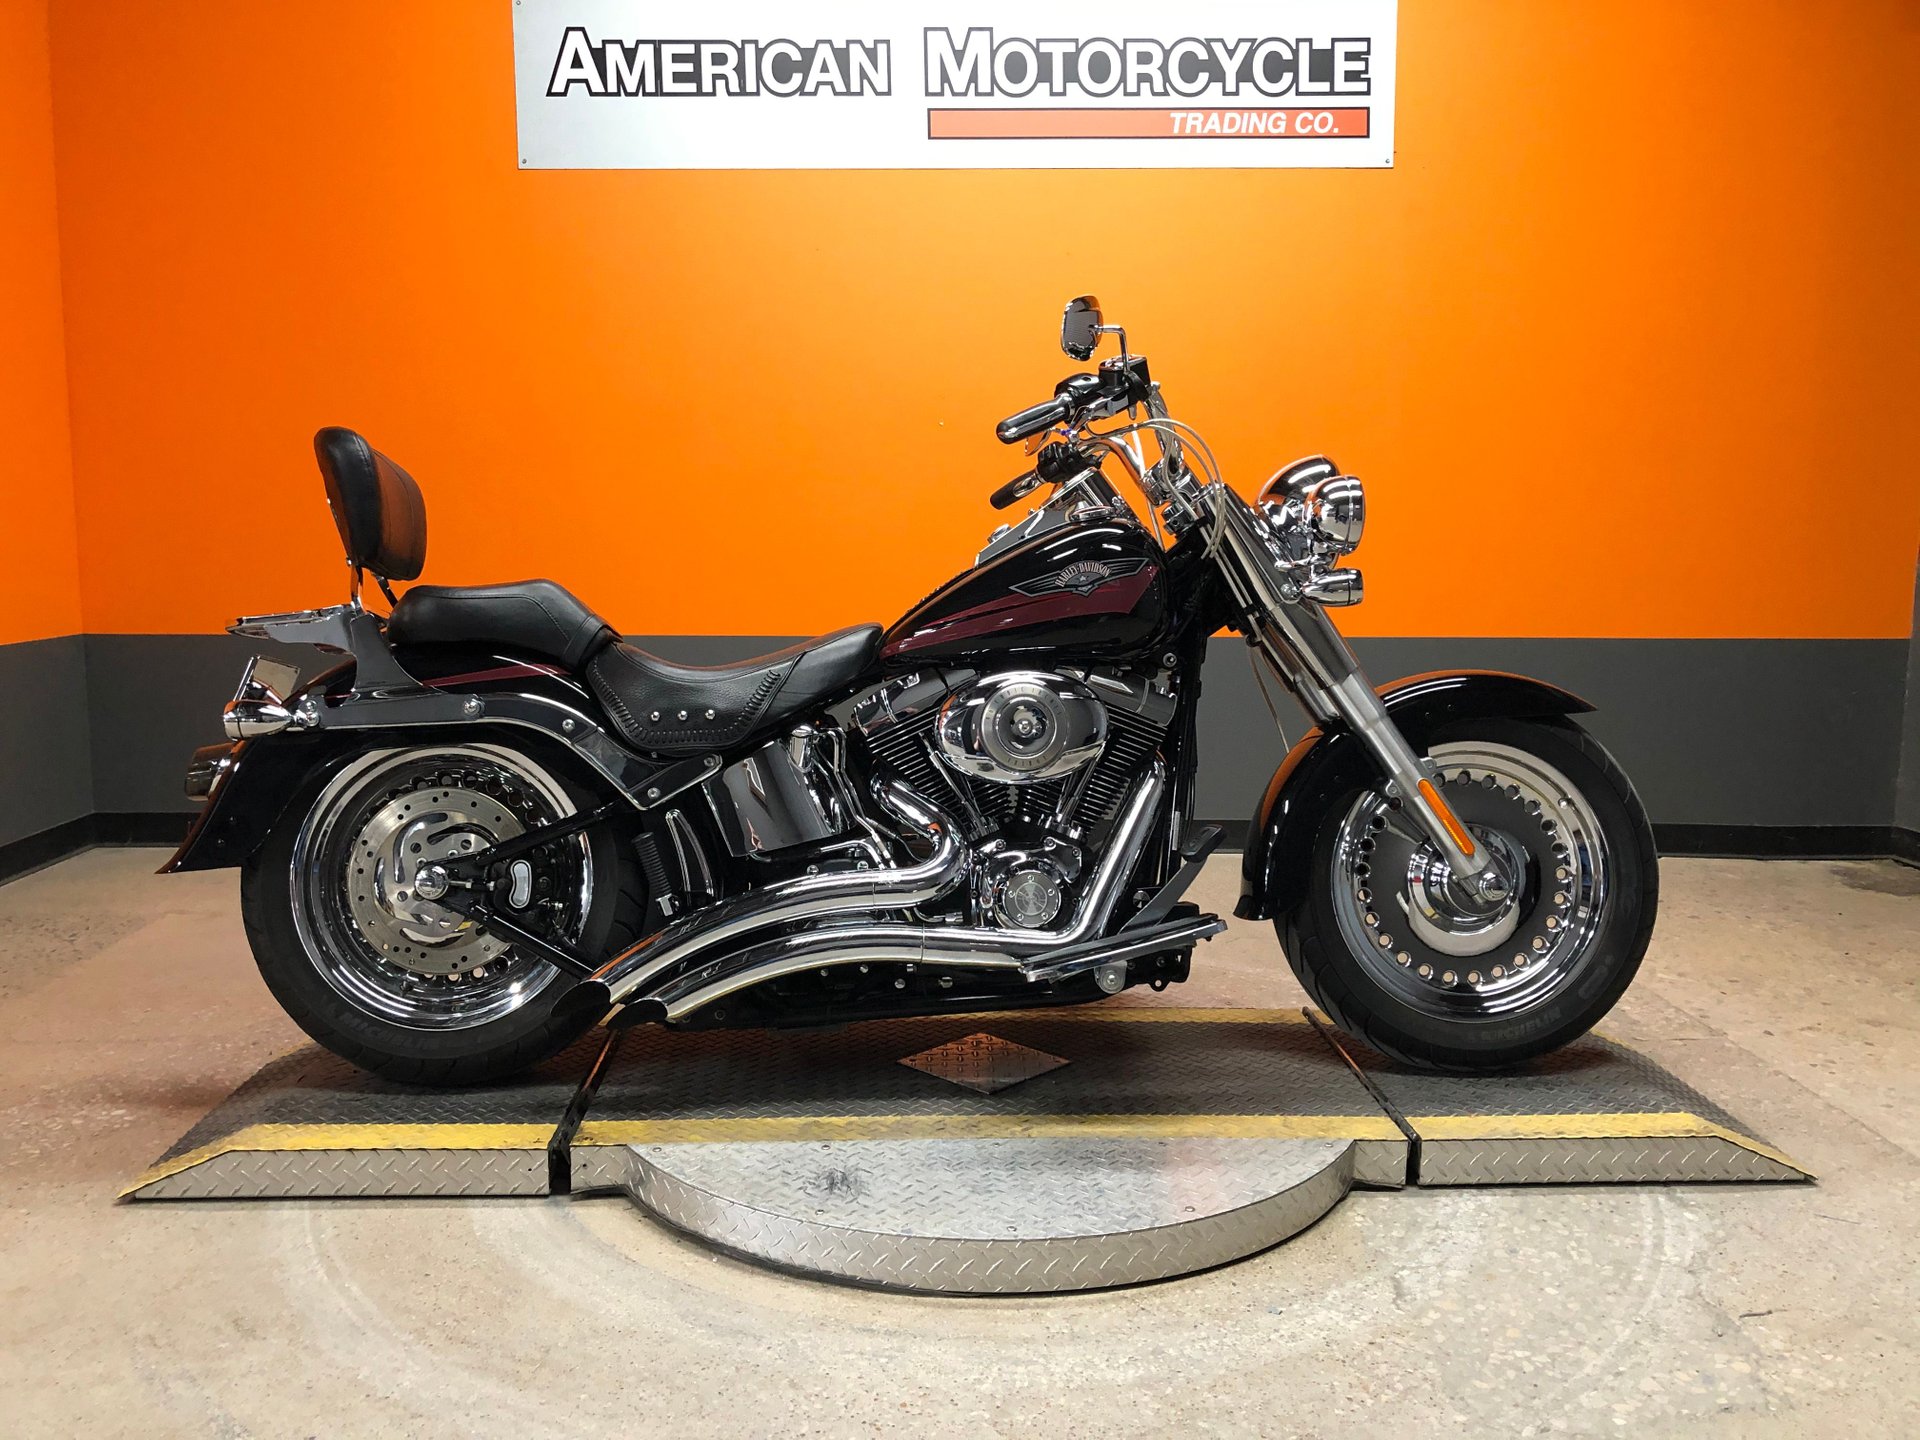 2007 Harley-Davidson Softail Fat Boy | American Motorcycle Trading Company  - Used Harley Davidson Motorcycles